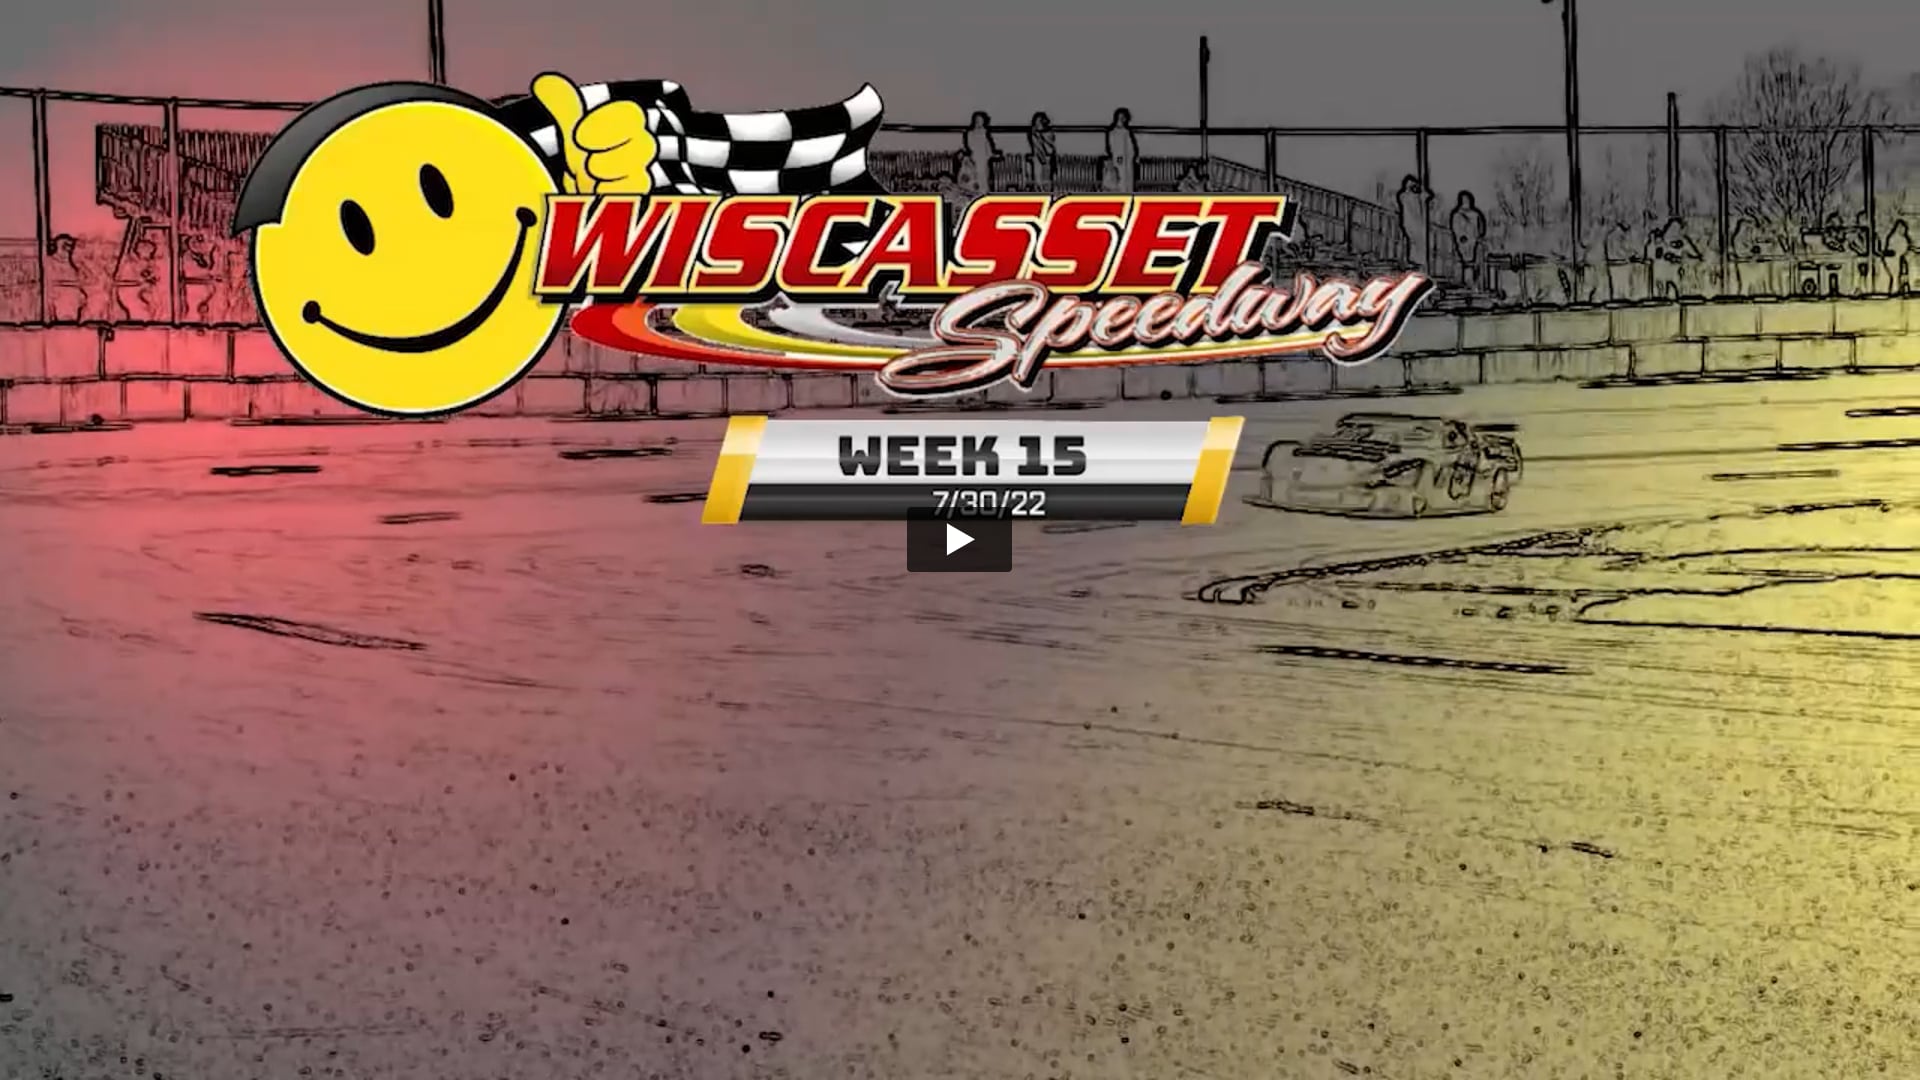 2022 Racing at Wiscasset Speedway: Week 15